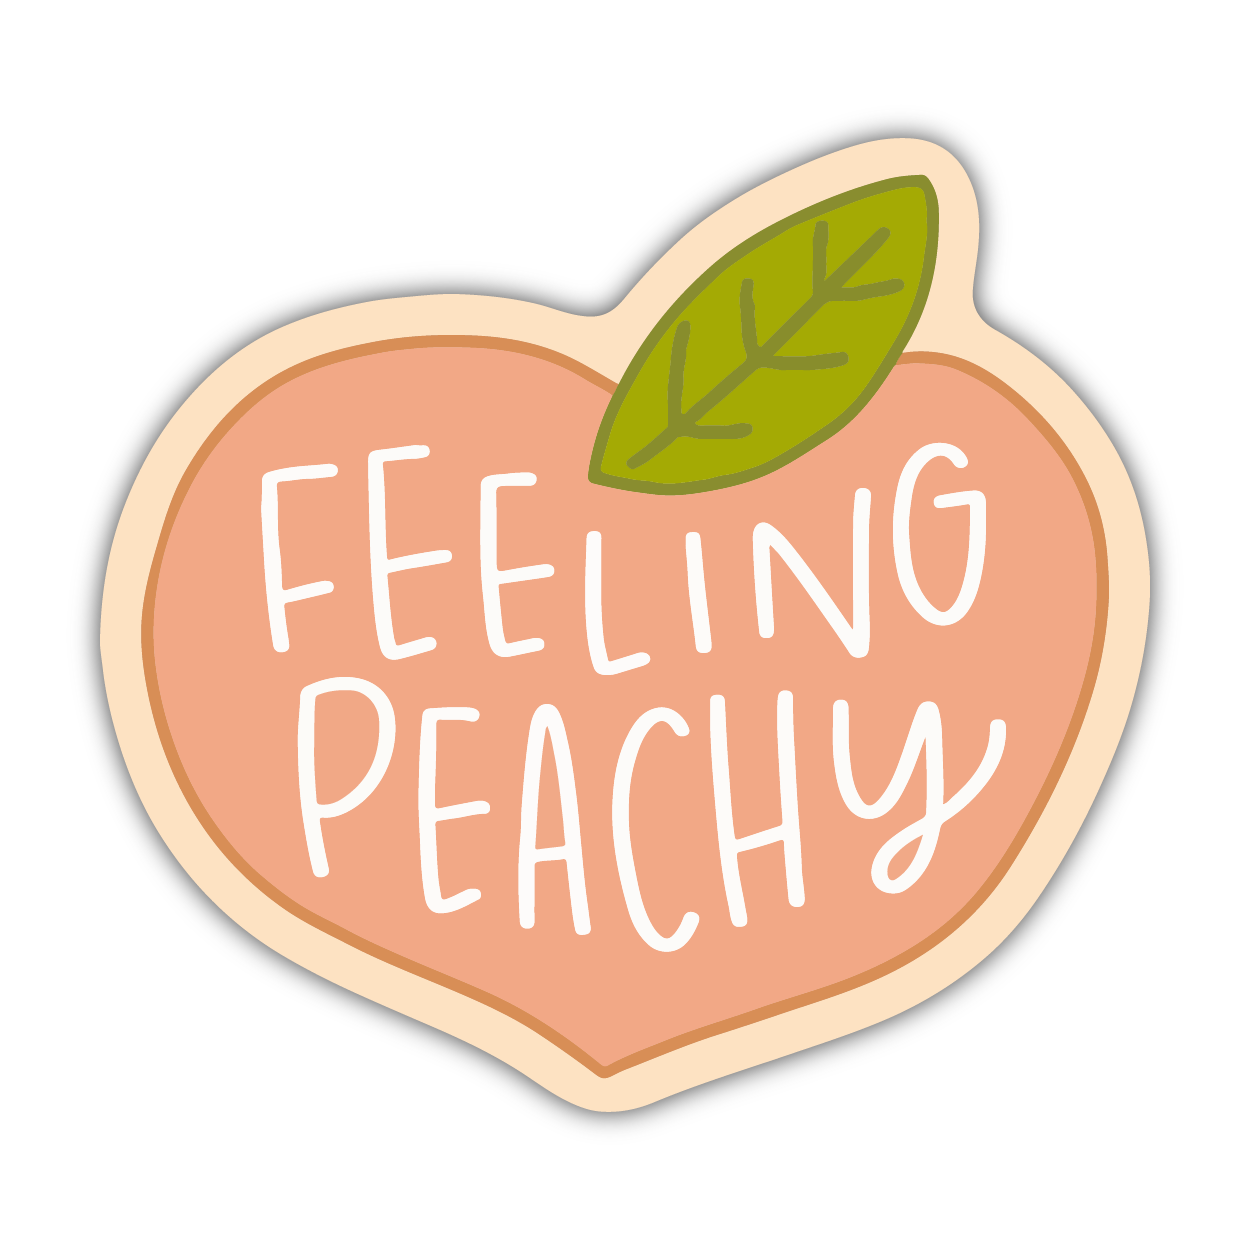 Feeling Peachy Sticker